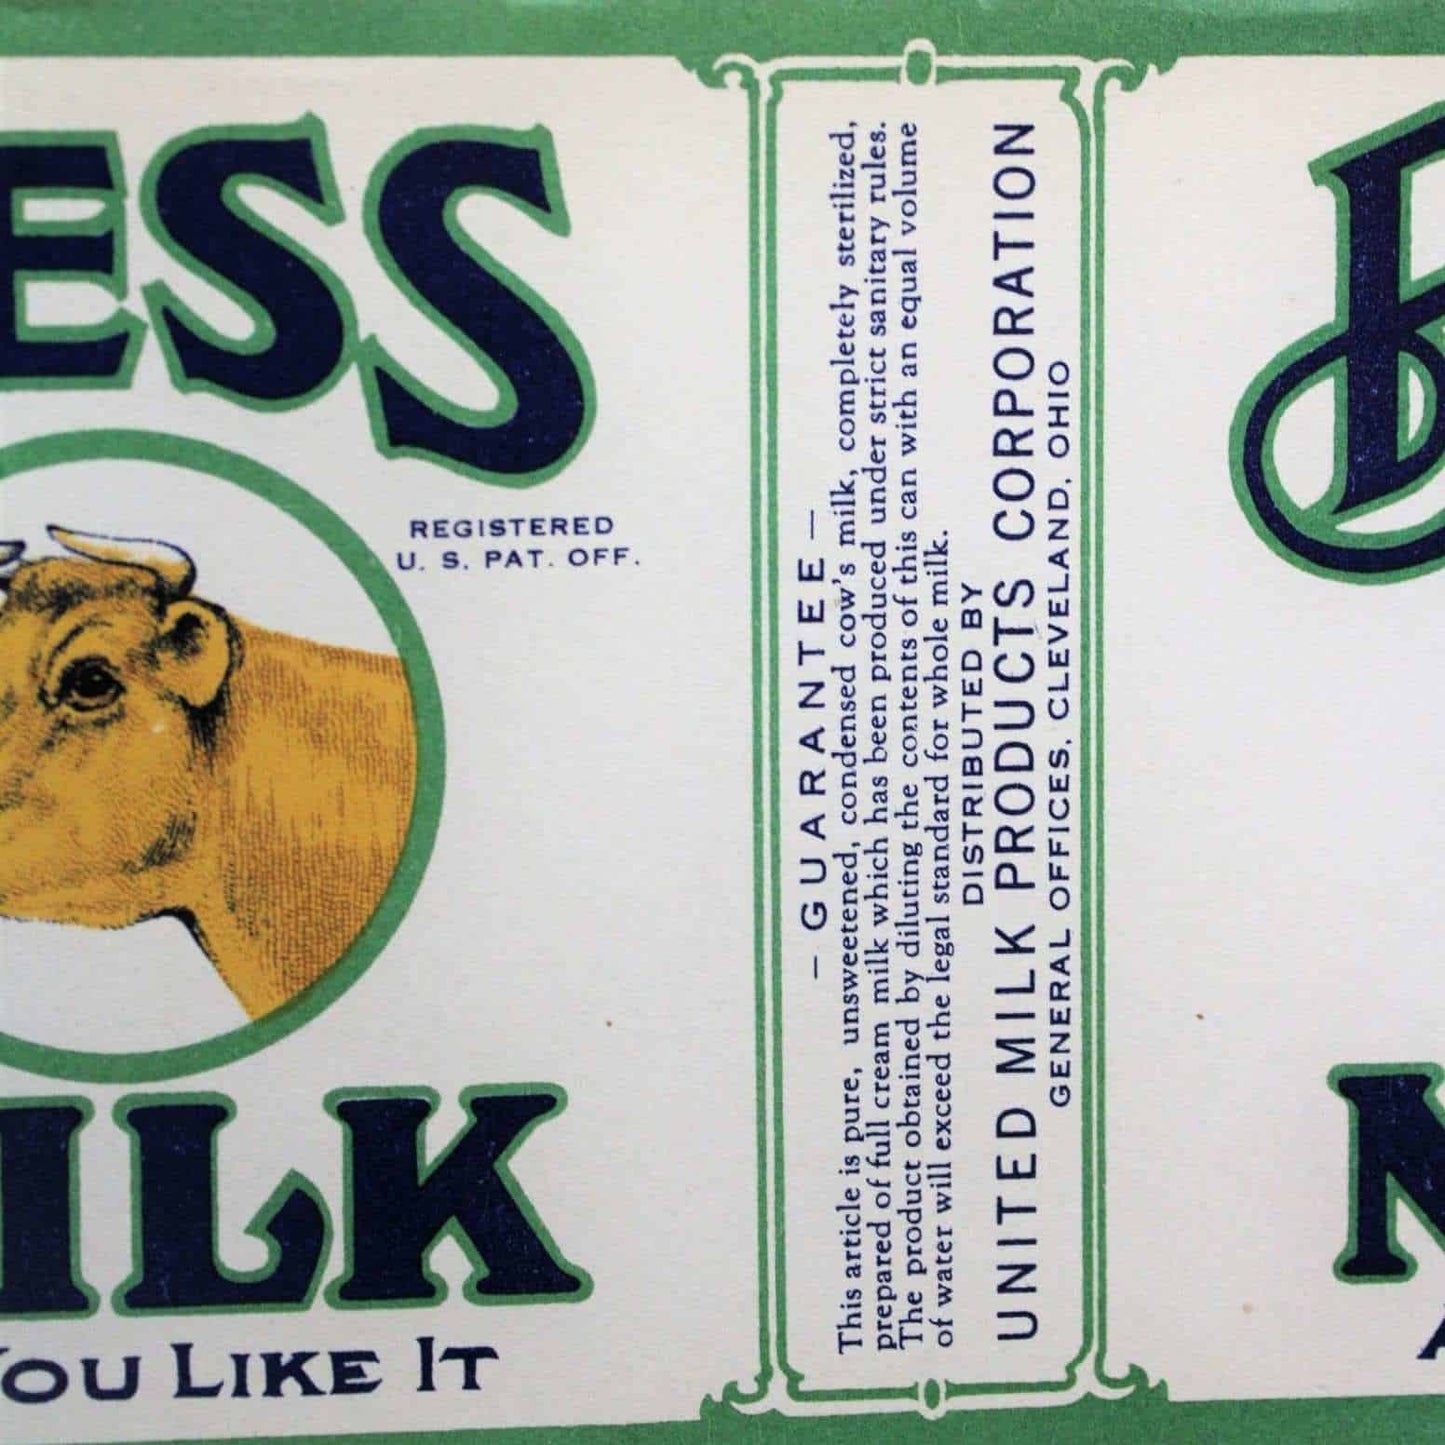 Can Label, Bess Milk, Original NOS Lithograph, Antique 1910's